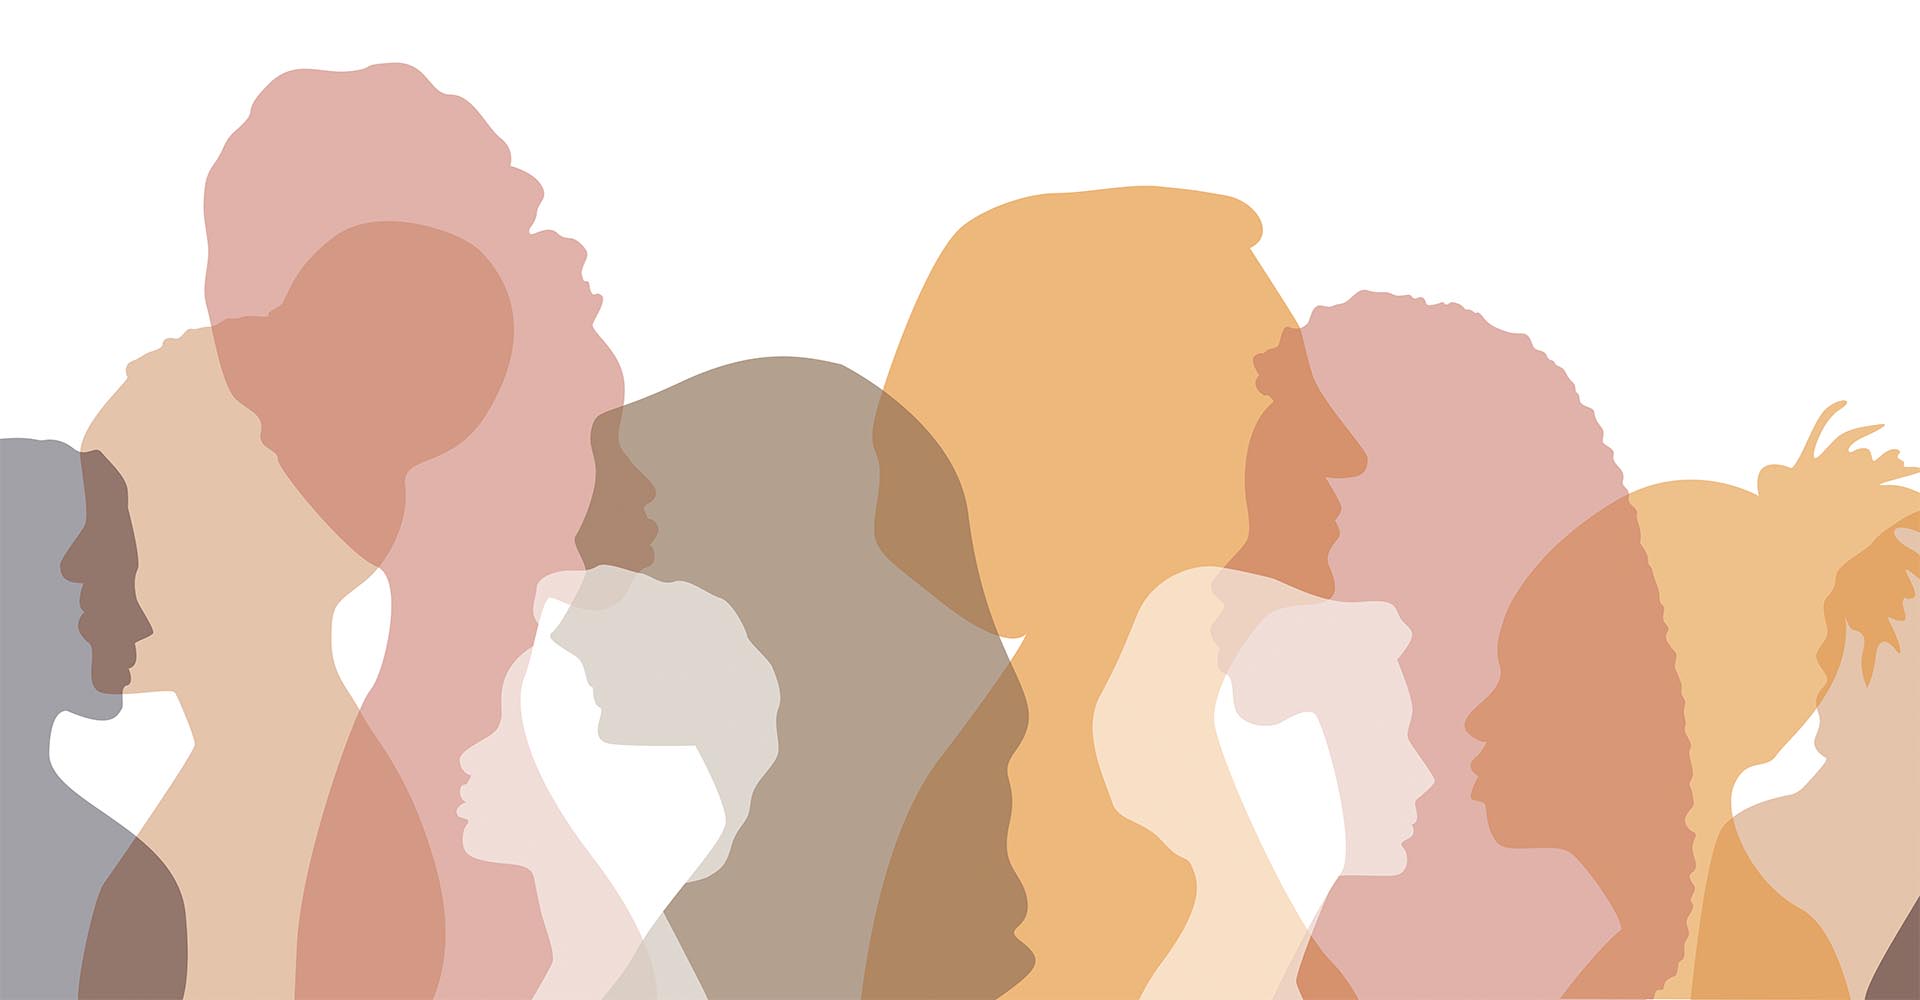 Illustration of women's silhouettes